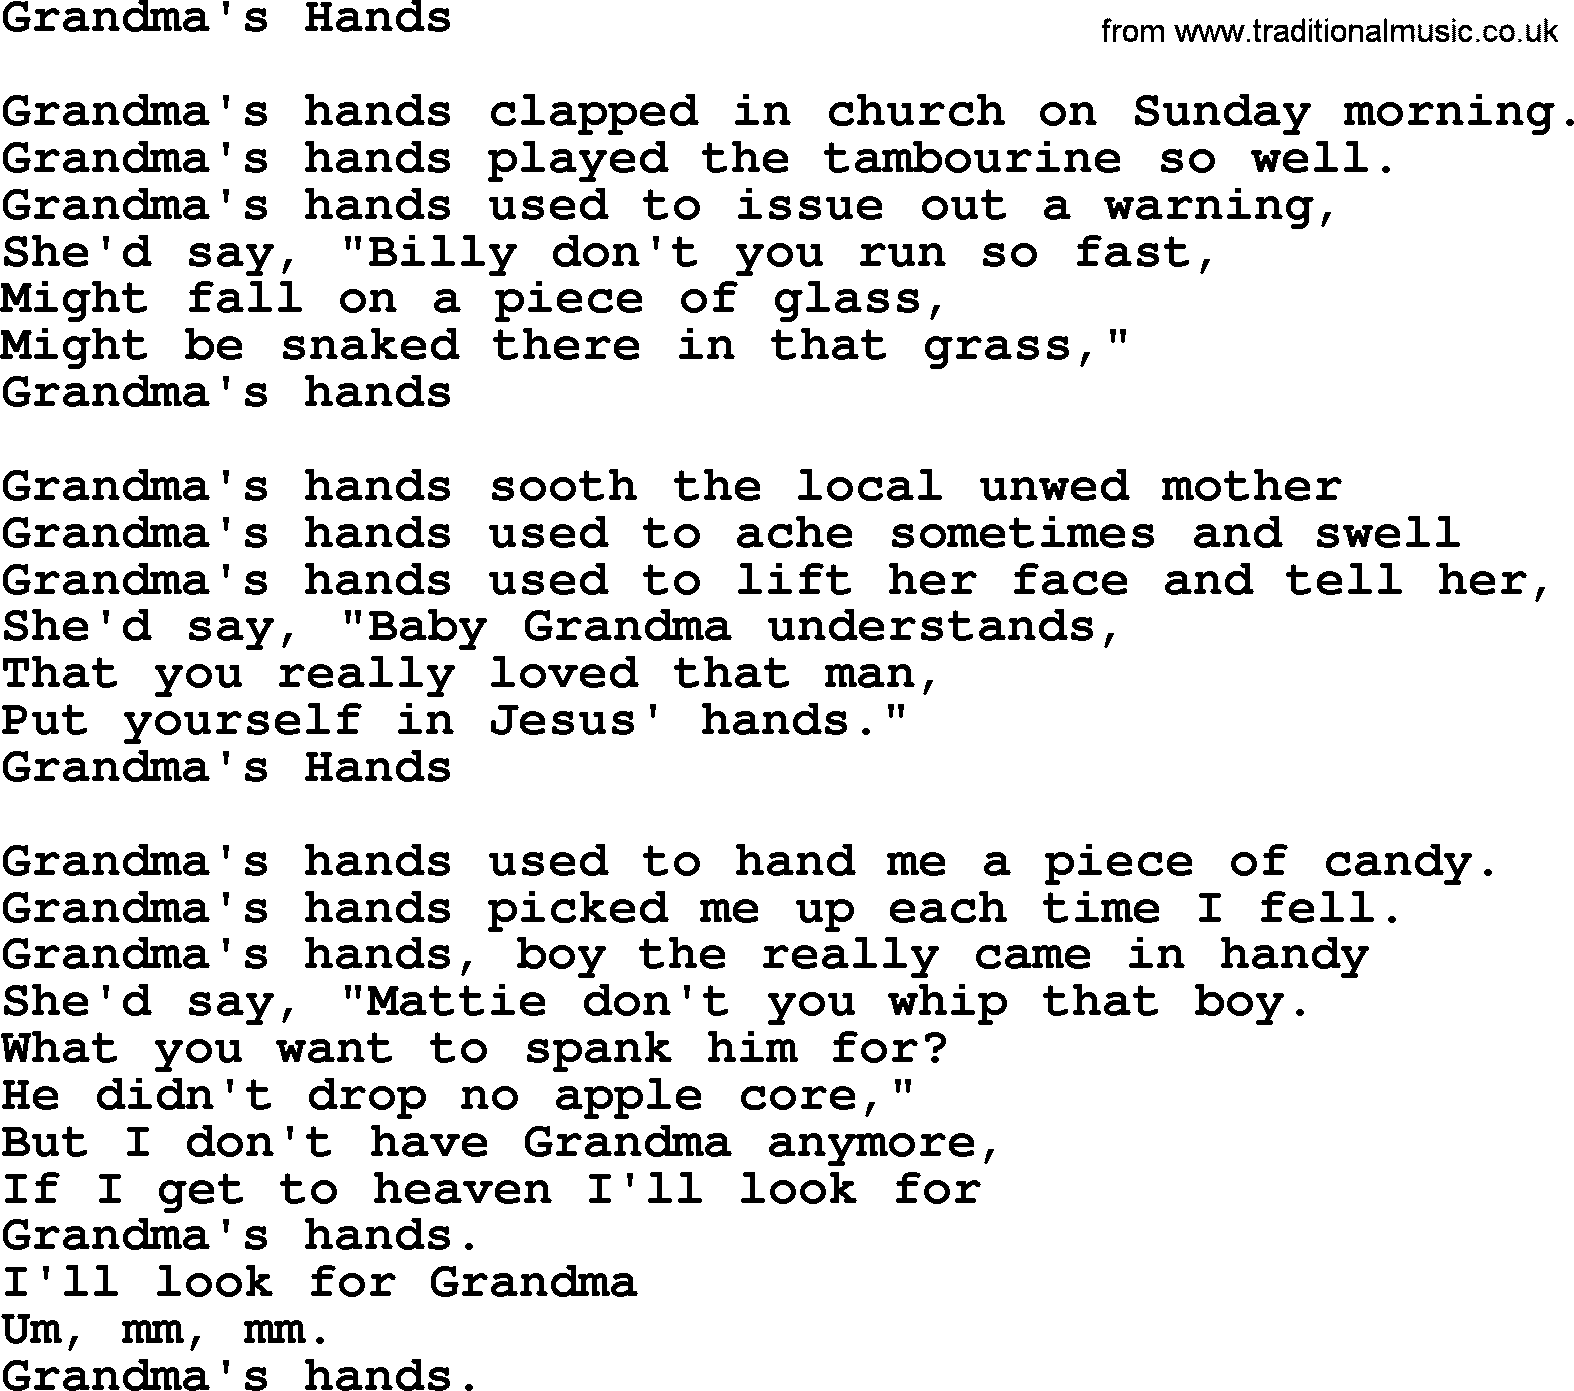 Willie Nelson song: Grandma's Hands lyrics